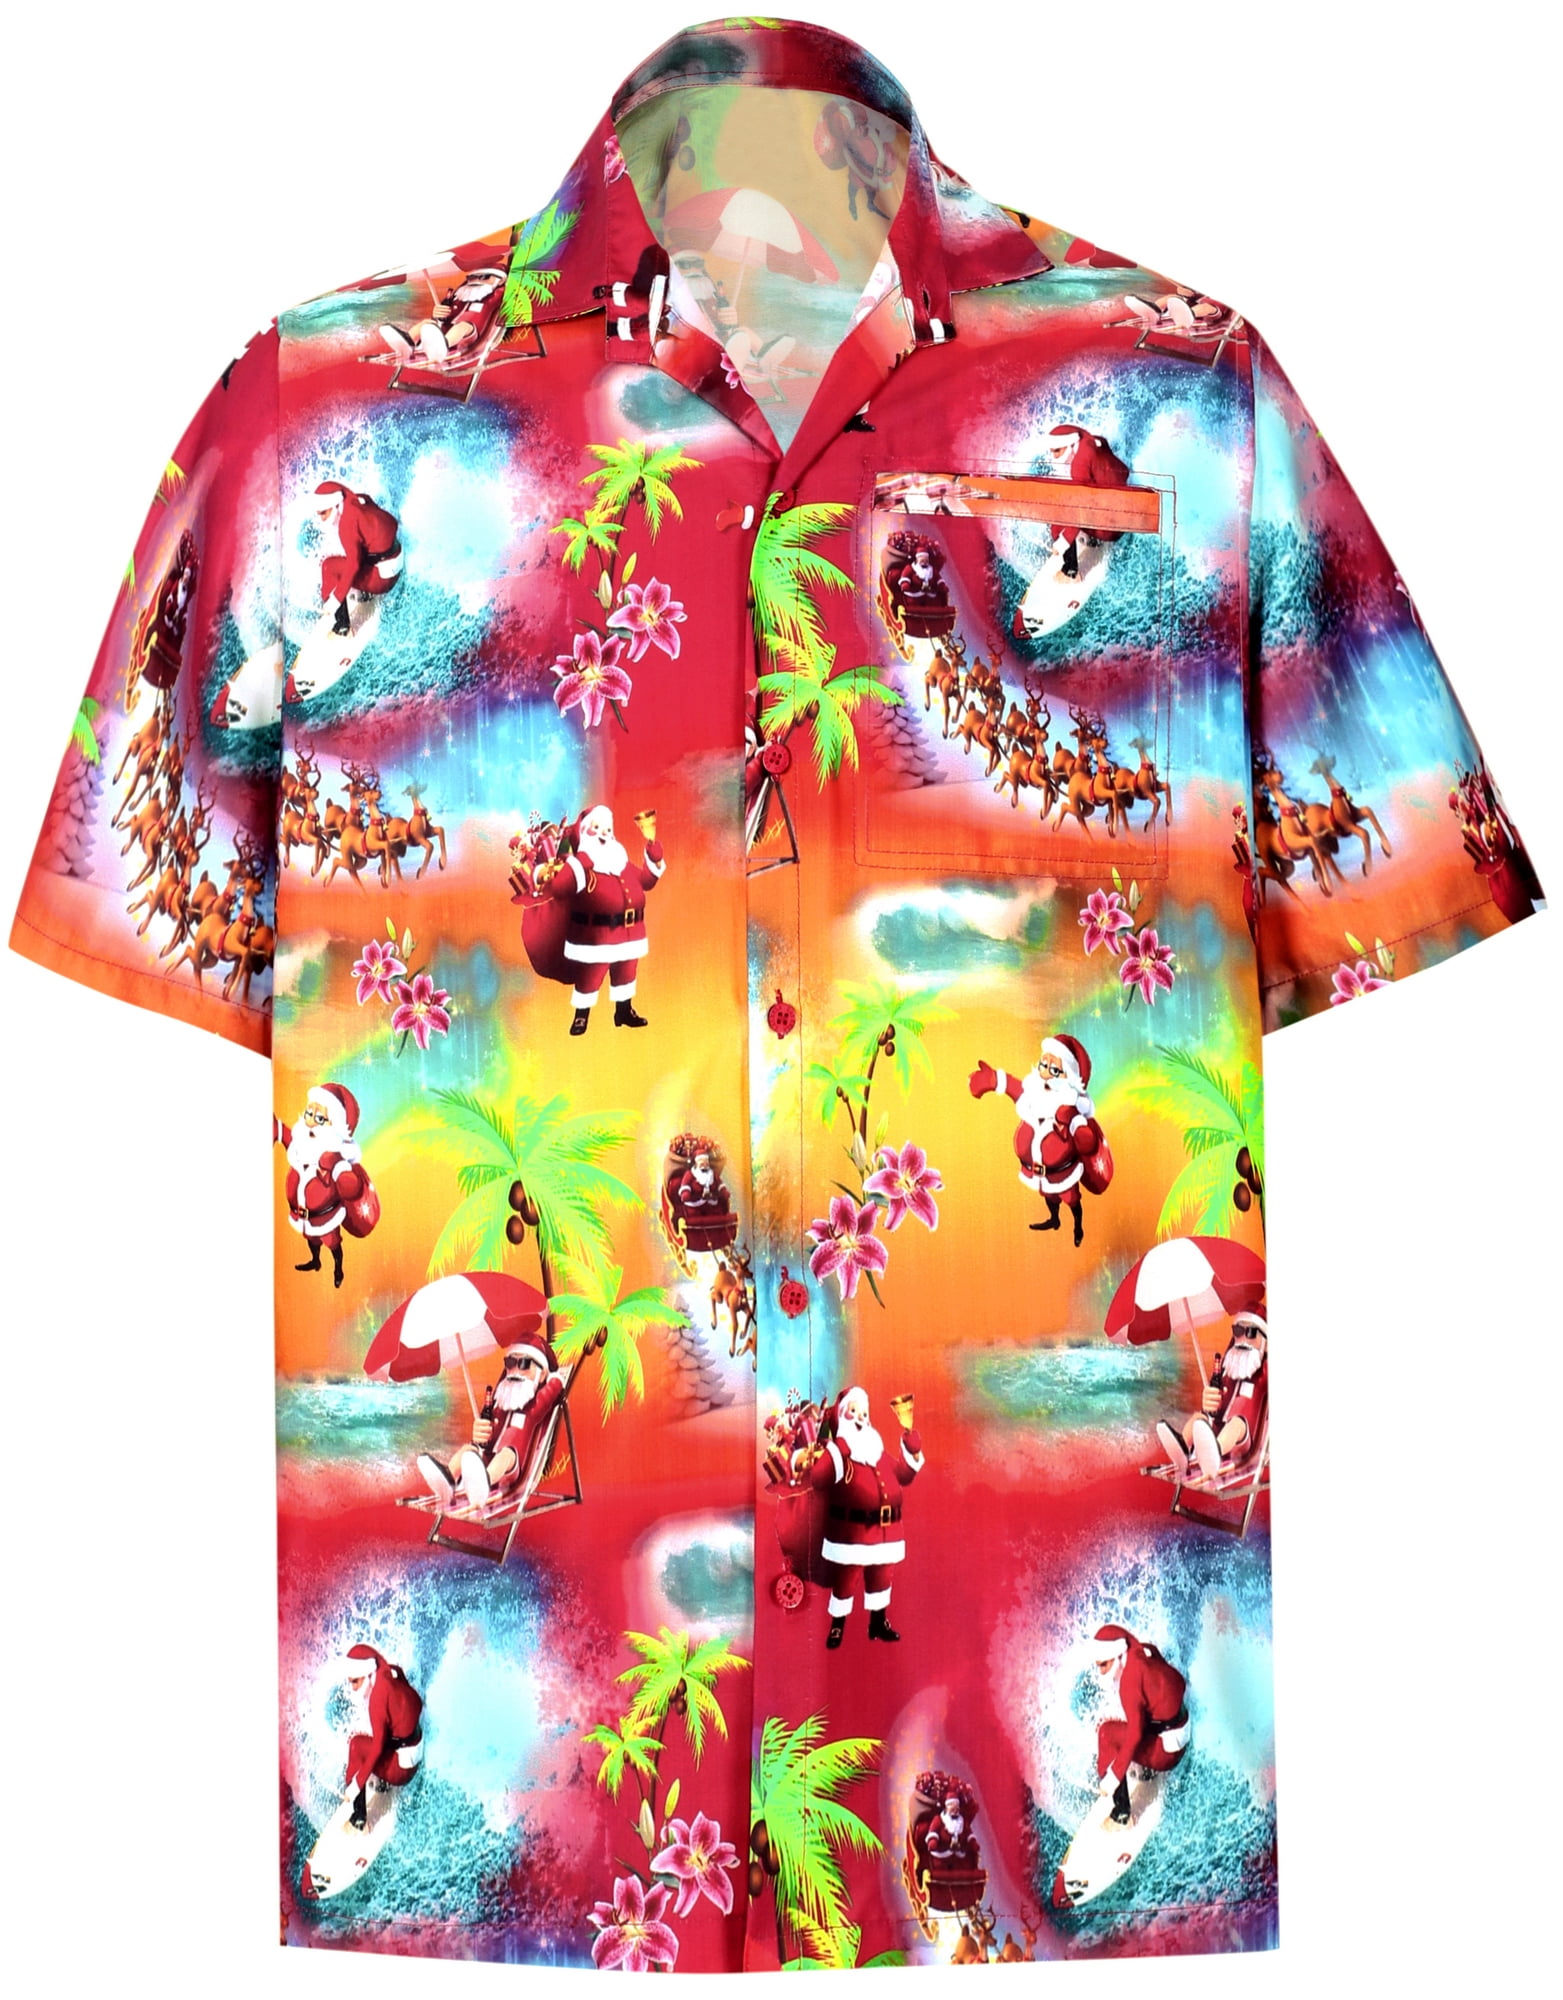 LA LEELA Womens Plus Size Hawaiian Shirt Button Down Aloha Party Shirt Printed B